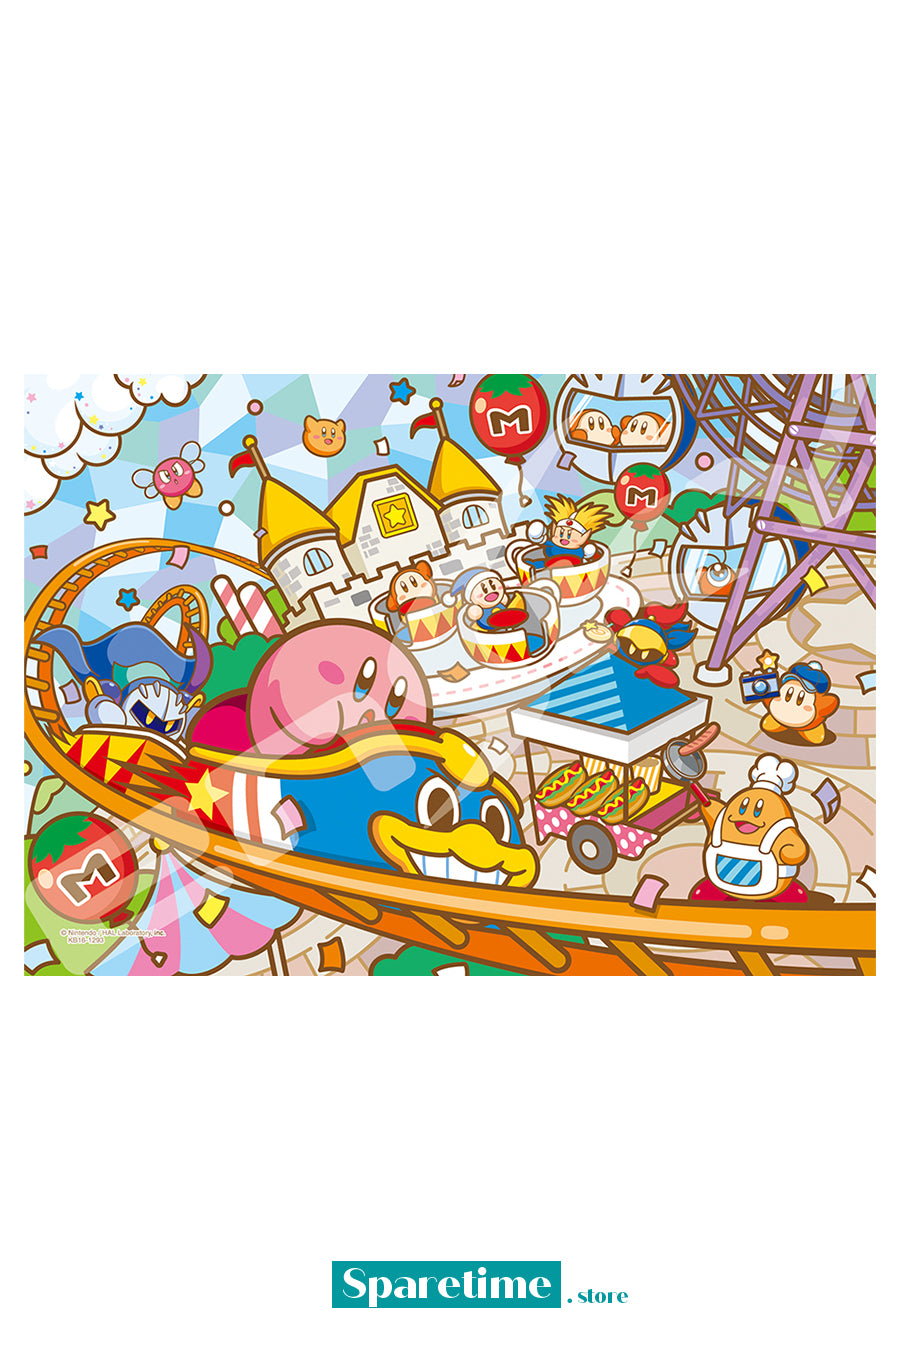 Kirby PuPuPu Park, Open! Artcrystal Jigsaw Puzzle (208-AC39) "Kirby", Ensky Artcrystal Puzzle